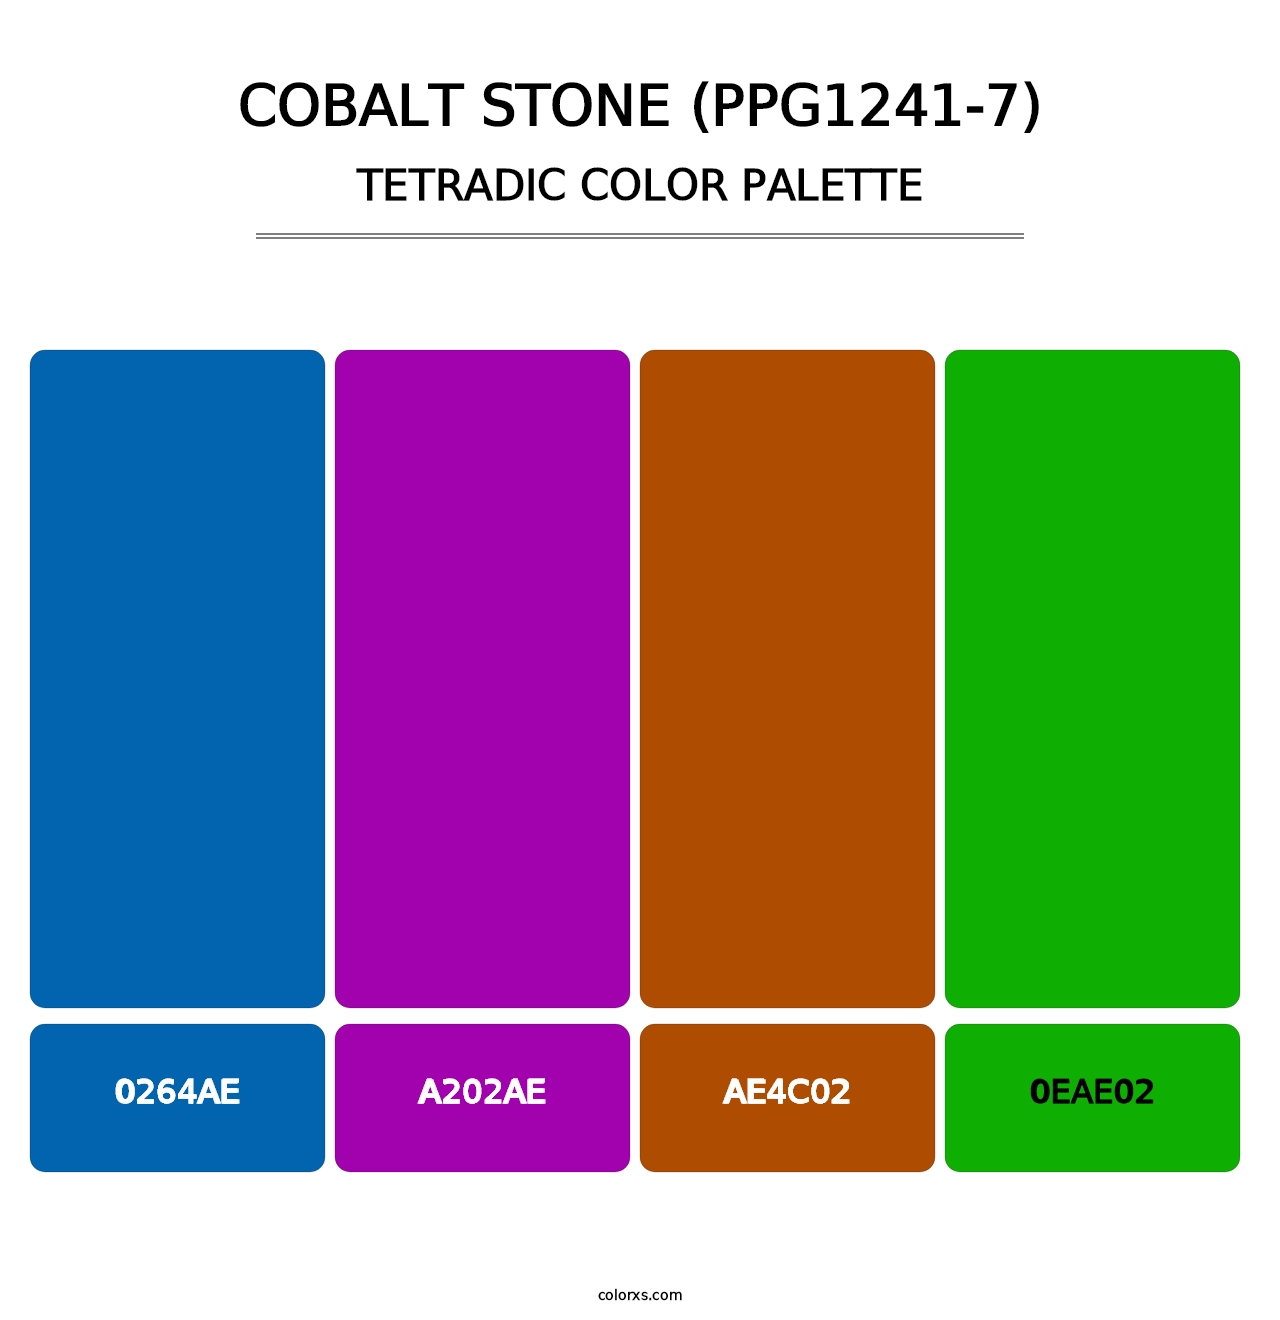 Cobalt Stone (PPG1241-7) - Tetradic Color Palette